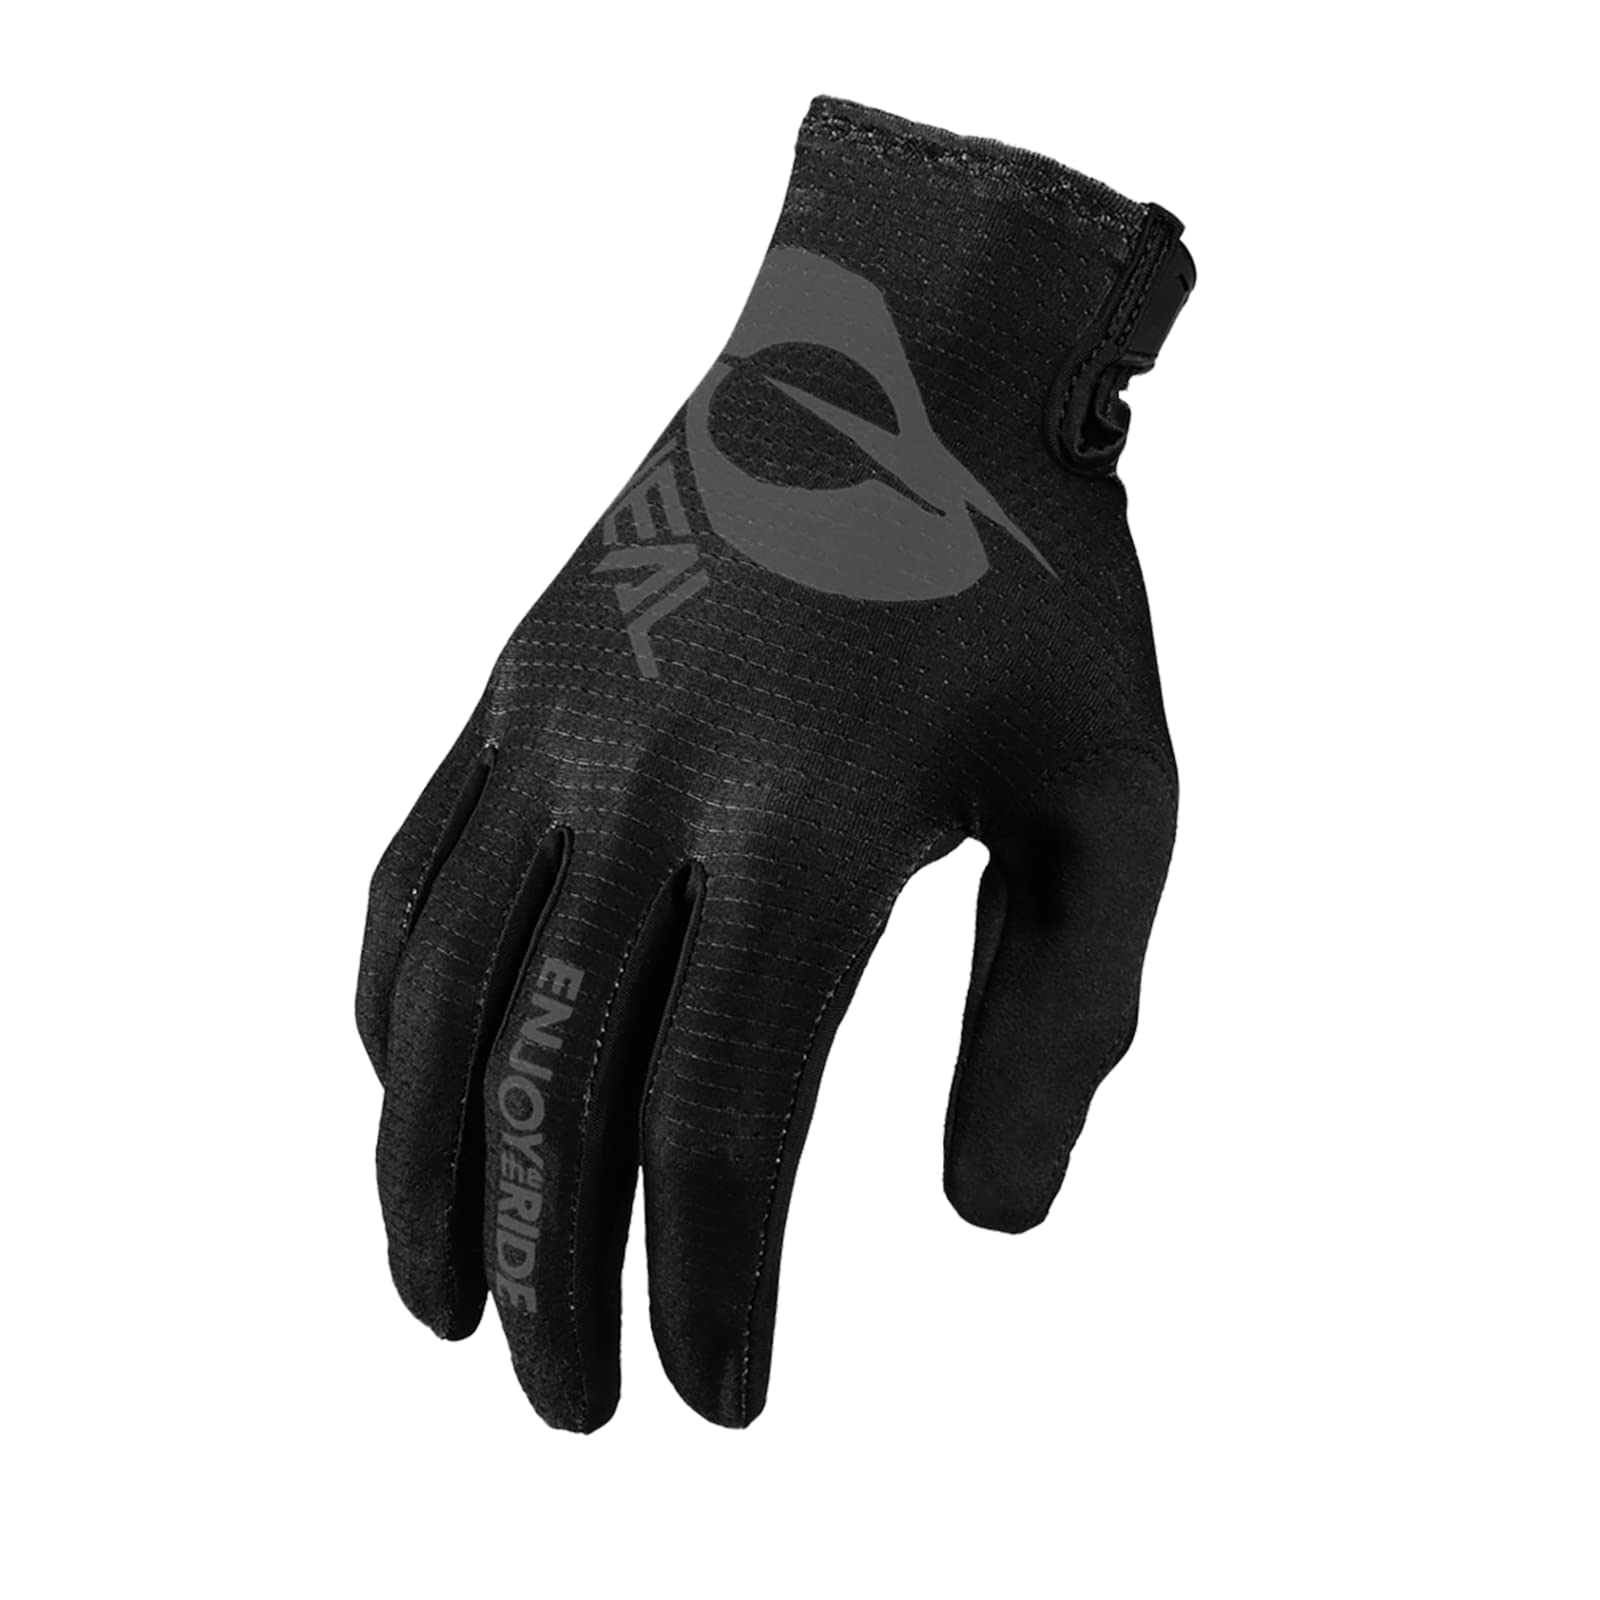 O'NEAL | Fahrrad- & Motocross-Handschuhe | MX MTB DH FR Downhill Freeride | Langlebige, Flexible Materialien, belüftete Handoberseite | Matrix Glove | Erwachsene | Schwarz Grau | Größe XL von O'NEAL